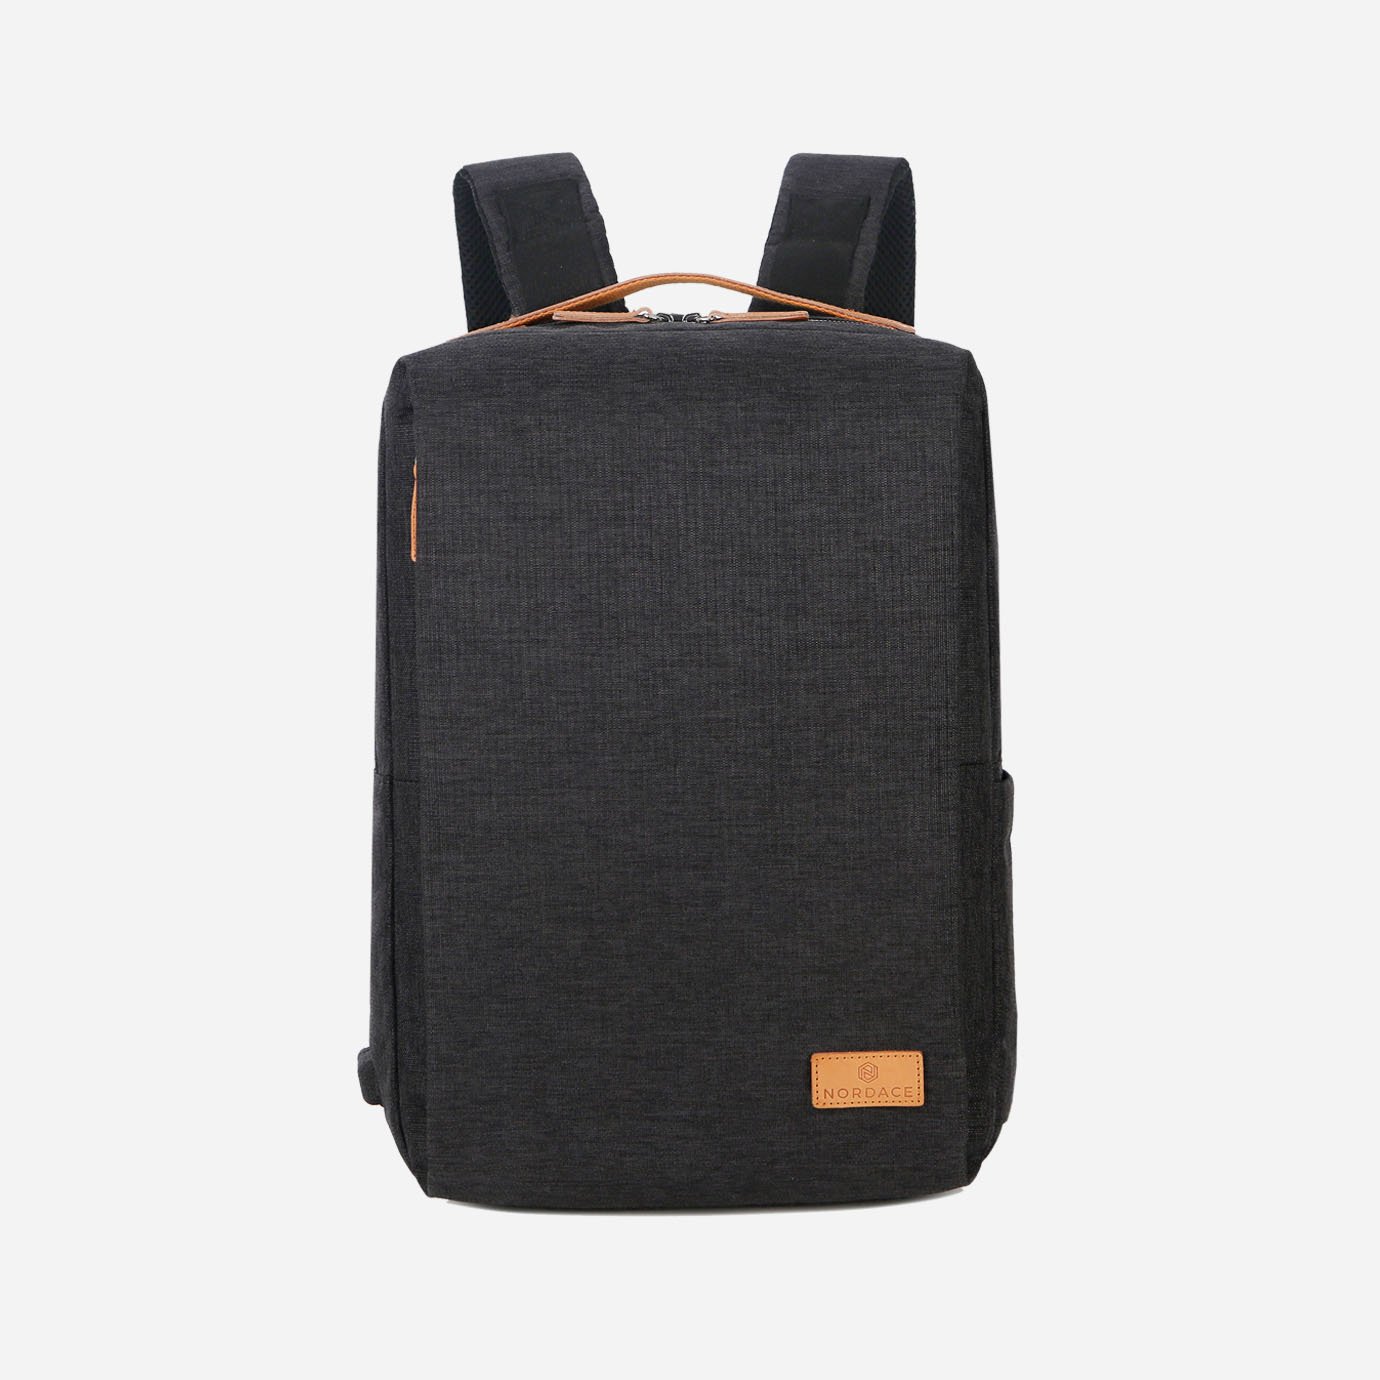 nordace.com | Nordace Siena – Smart Backpack